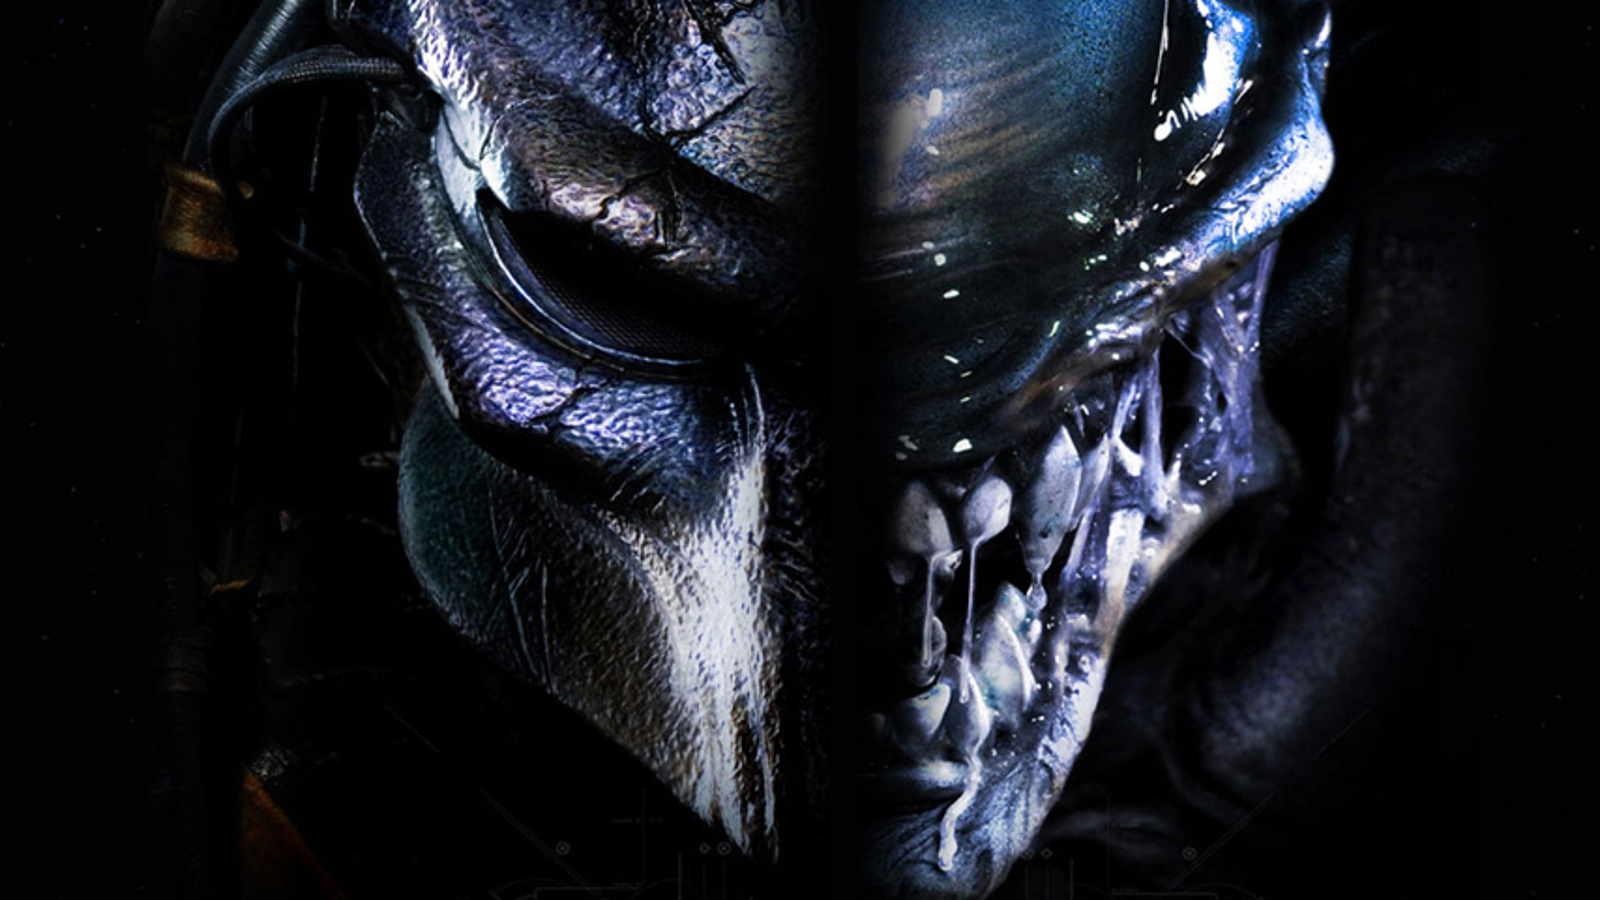 100+] Alien Vs Predator Wallpapers